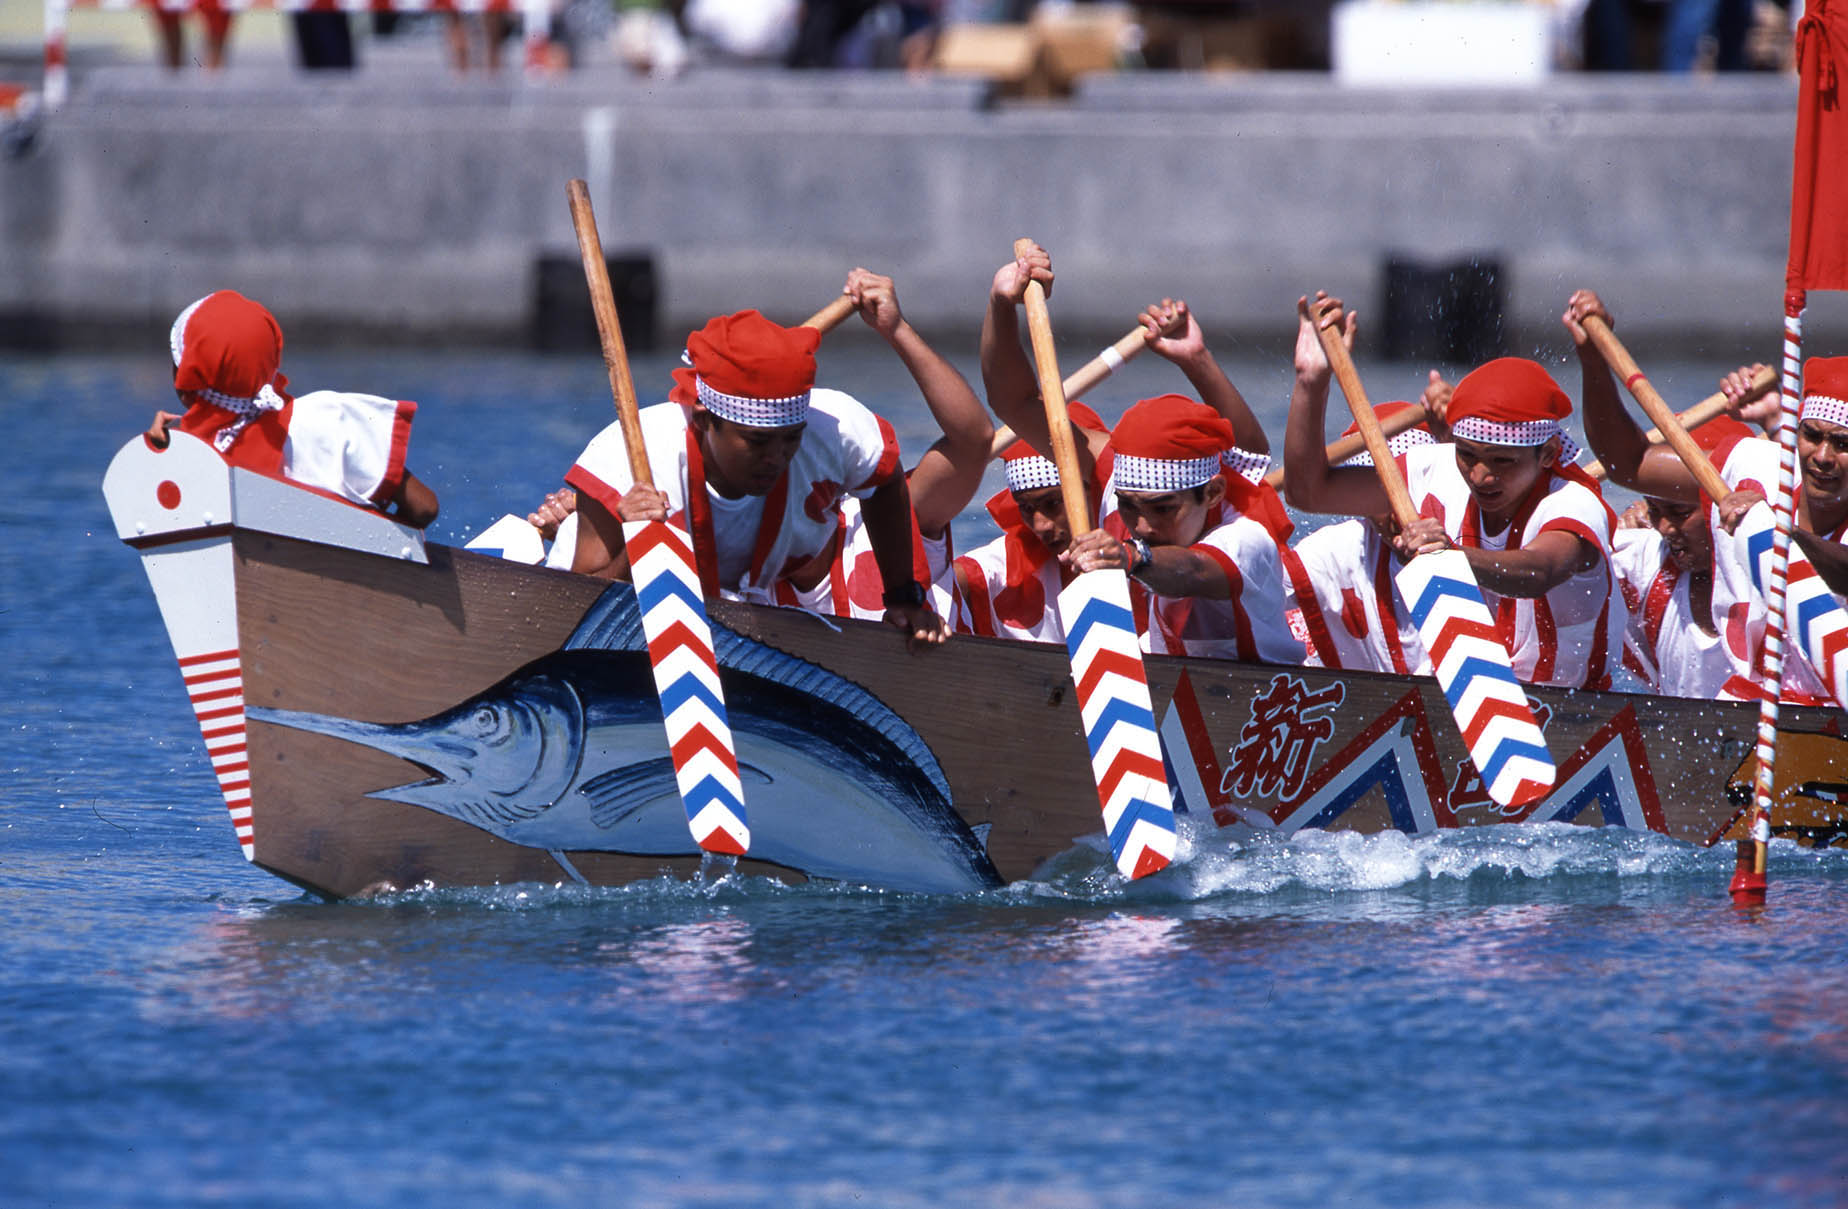 traditional boat racing